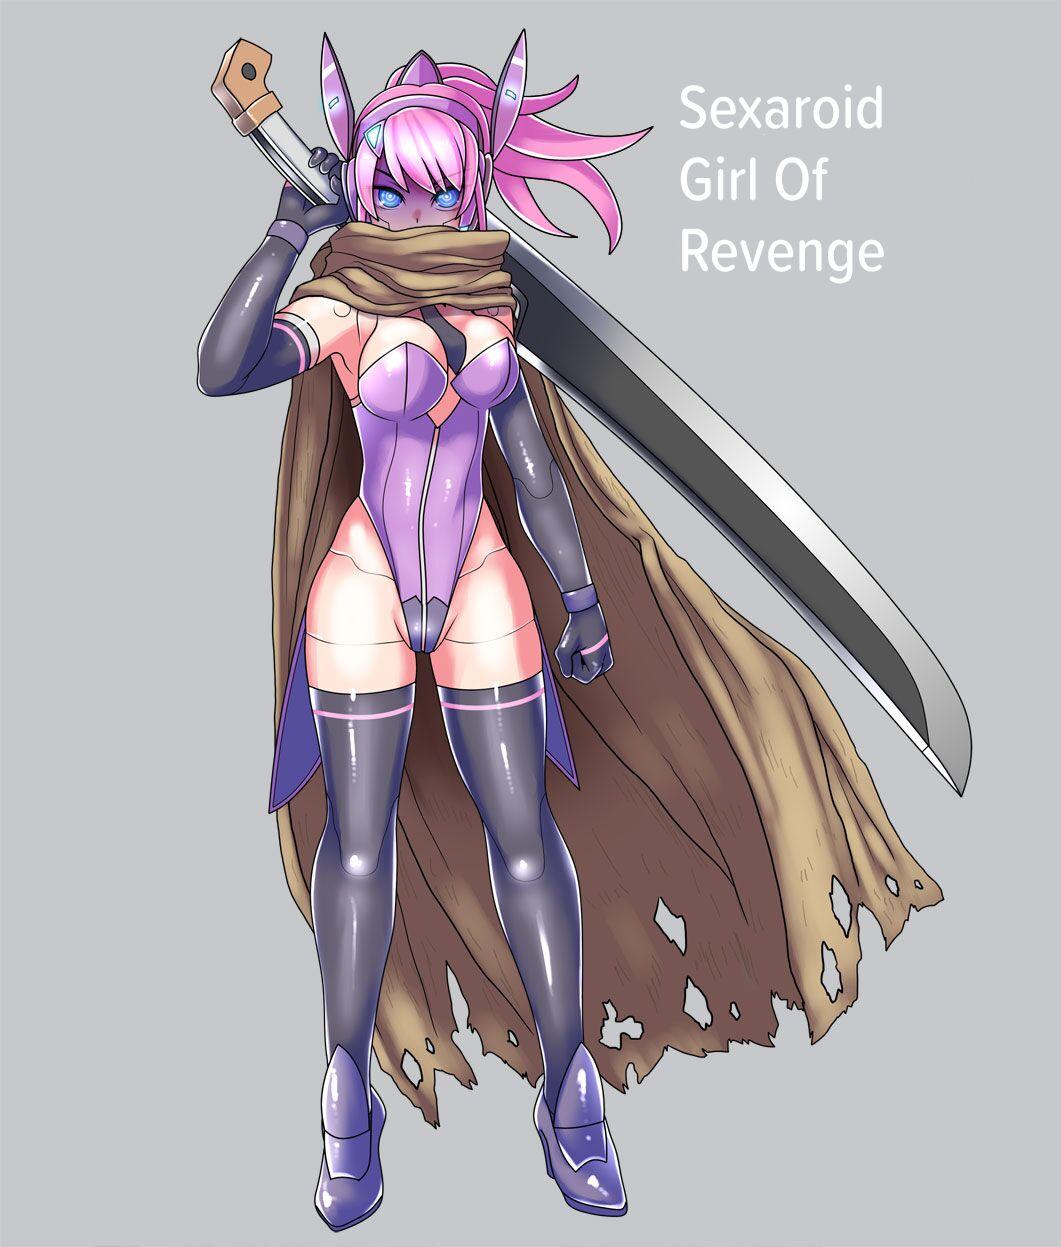 Pack Fukushuu no Sekusaroido Shoujo | Sexaroid Girl of Revenge Hunk - Picture 1